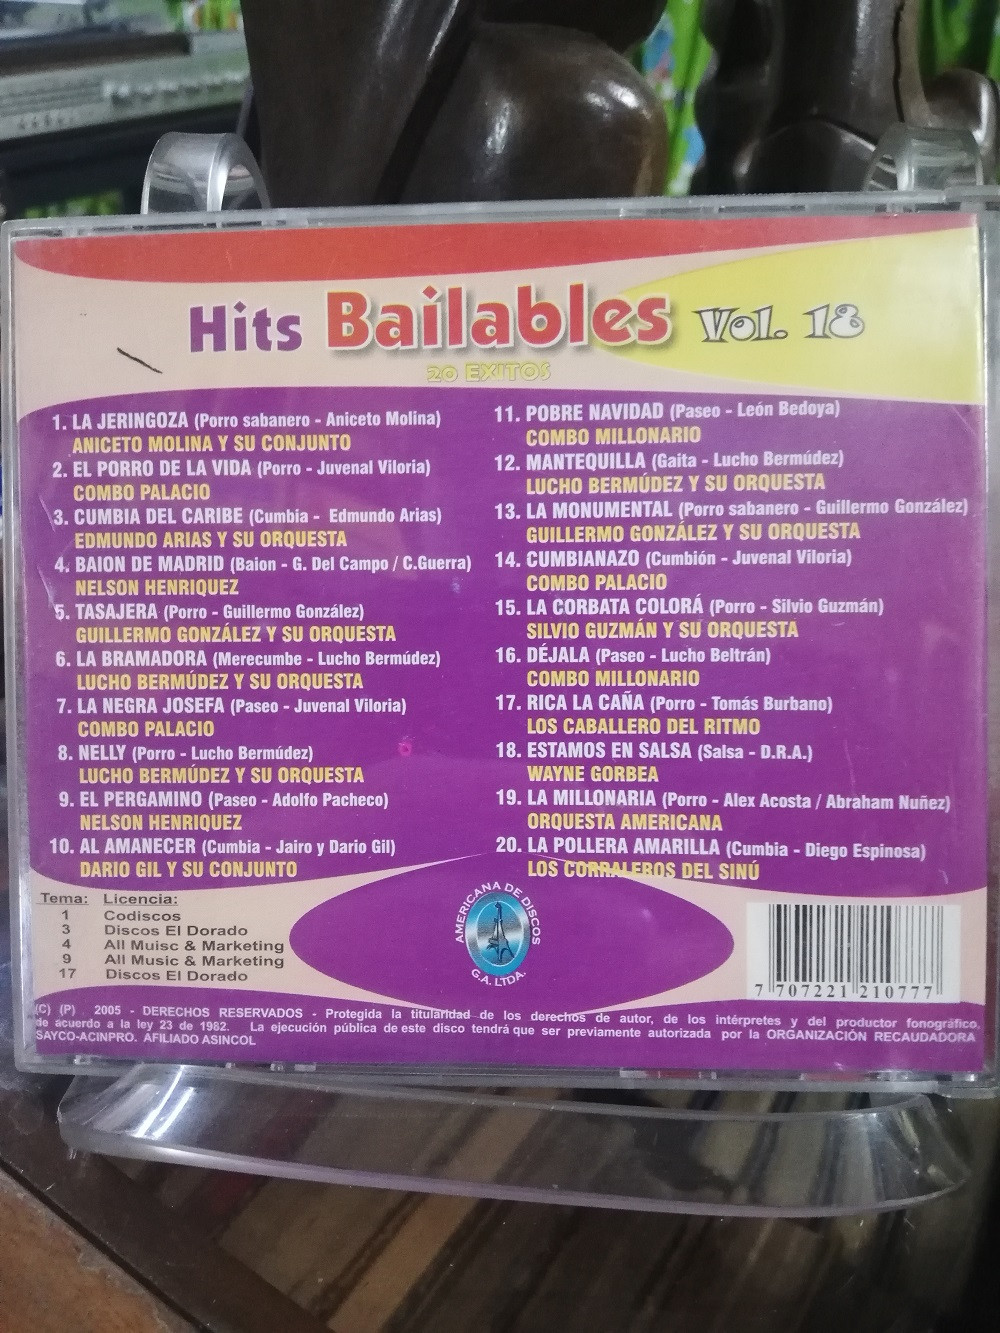 Imagen CD HITS BAILABLES - HITS BAILABLES VOL. 18 2